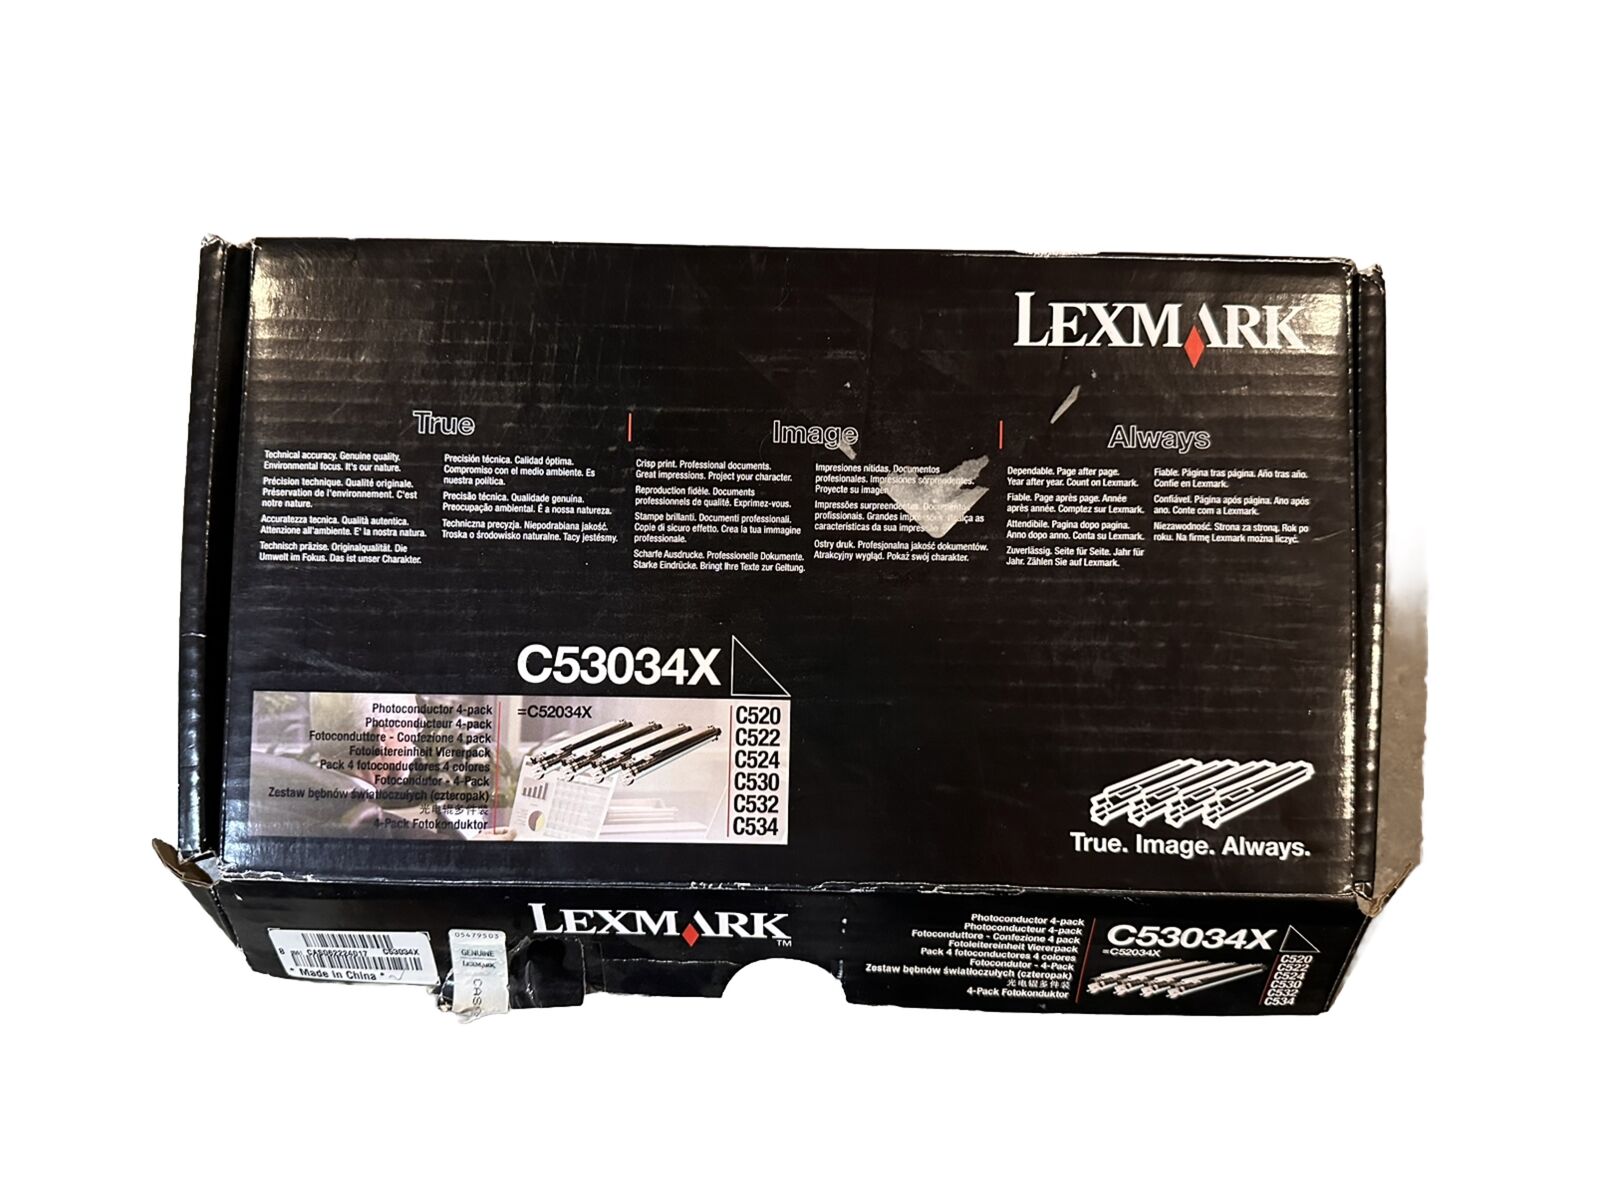 Lexmark C53034X photoconductor 4 pack 2 SEALED 520/522/524/530/532/534